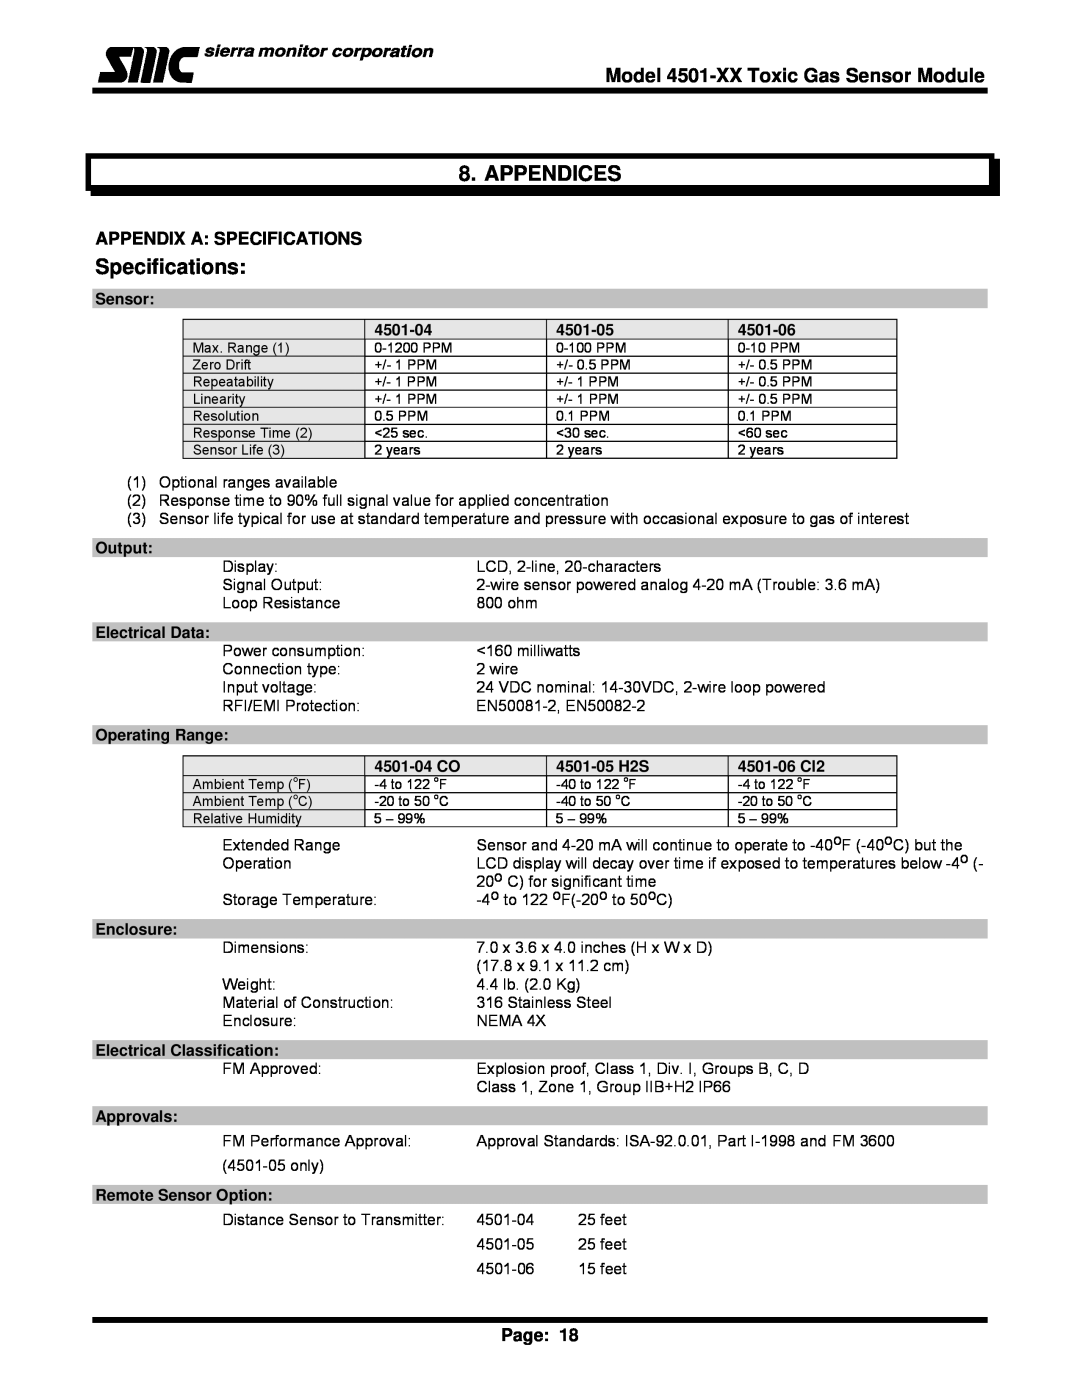 Sierra Monitor Corporation 4501-06 Appendices, Appendix A Specifications, Model 4501-XXToxic Gas Sensor Module, Page 